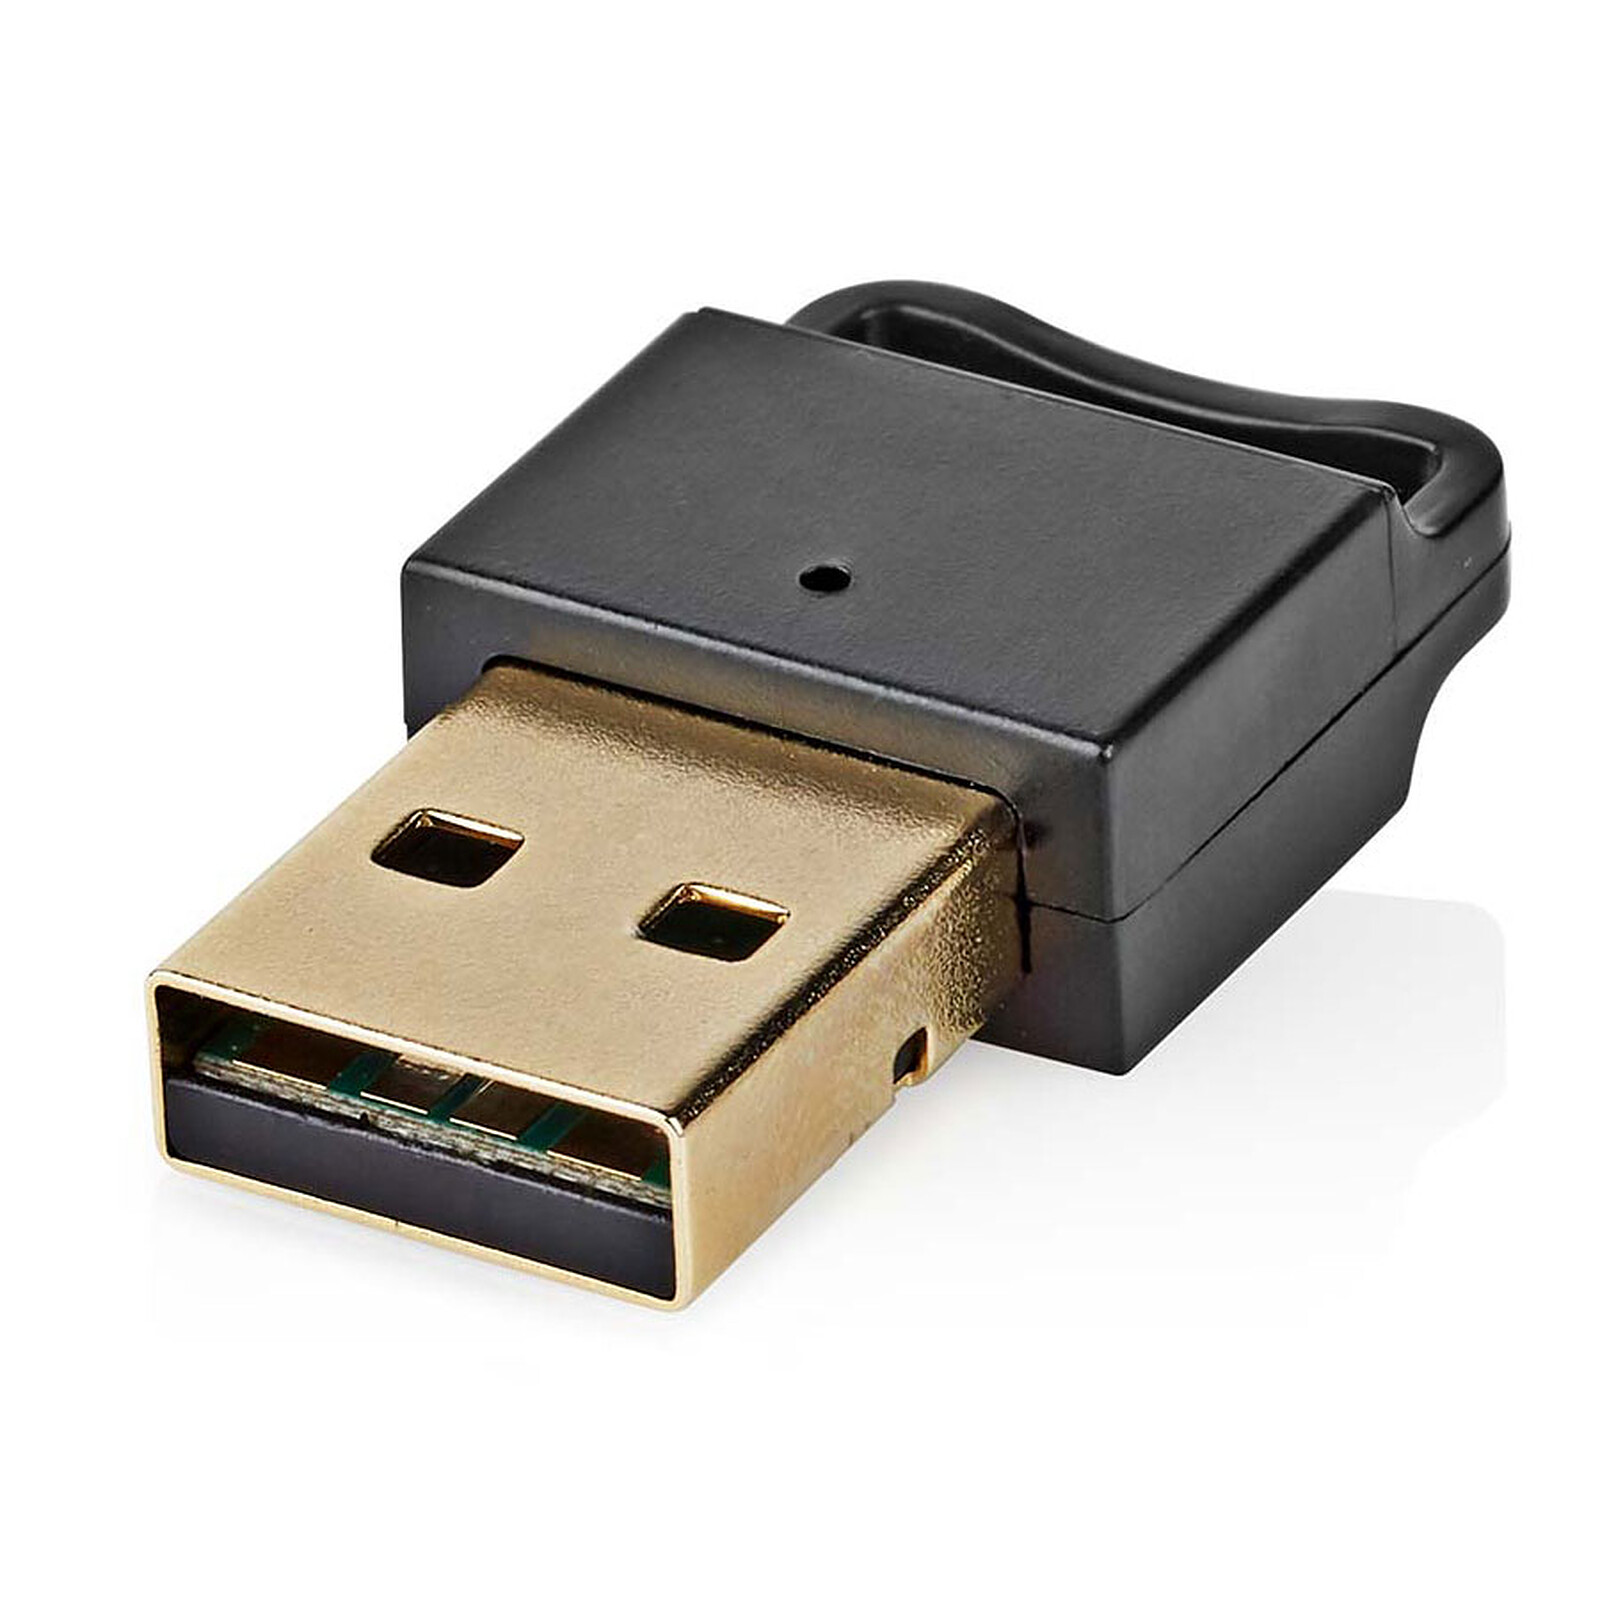 Clé USB Bluetooth Adaptateur Bluetooth 5.0 Mini clé USB avec faible  consommation d'énergie Plug and Play (Bluetooth 5.0) 